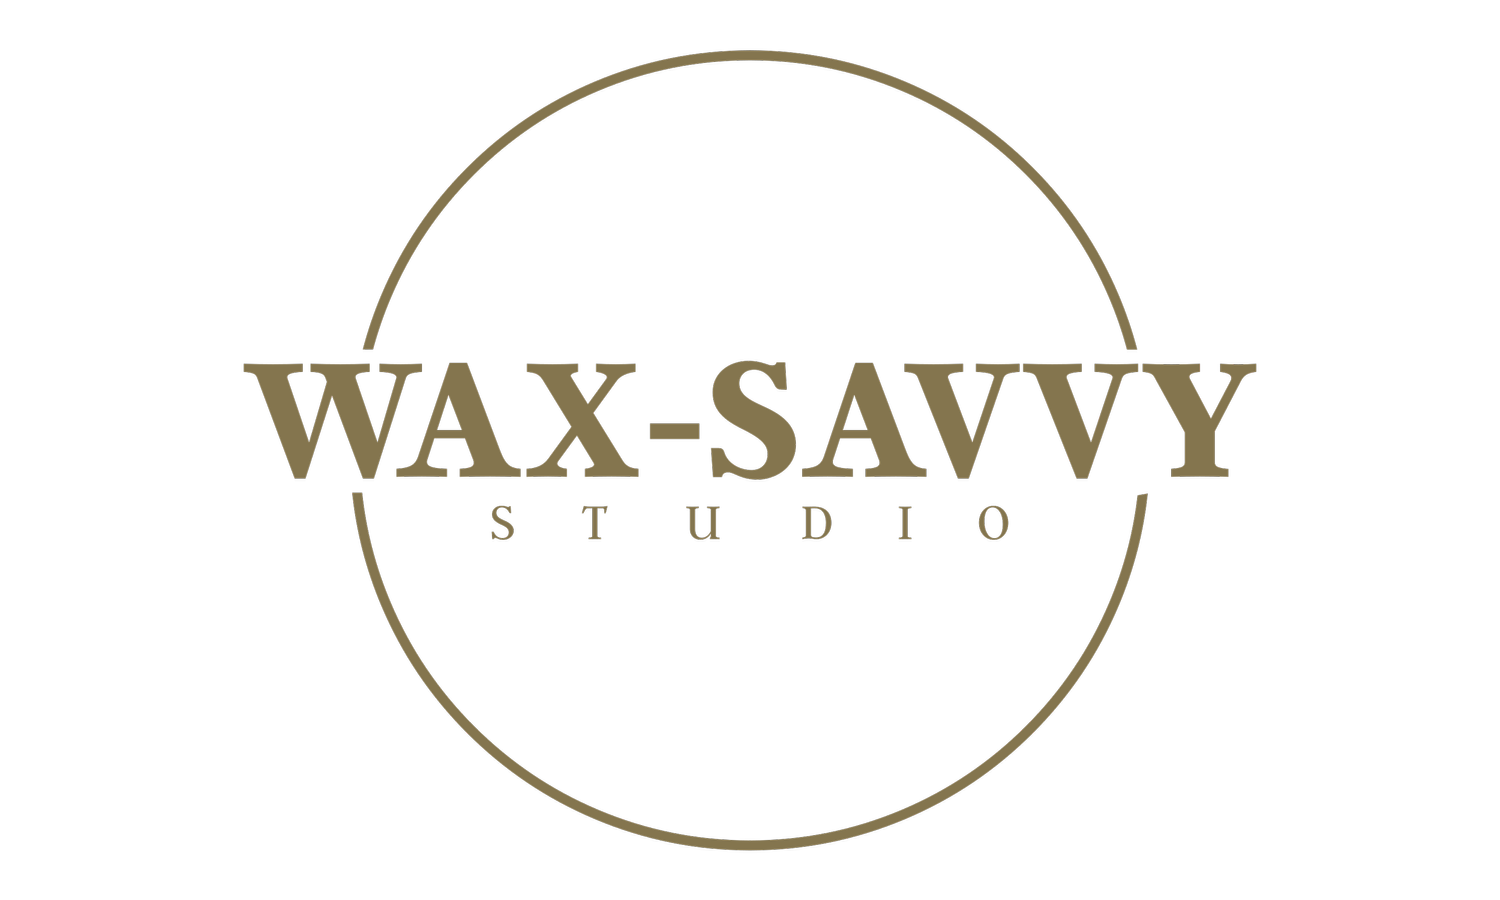 Wax-Savvy Studio